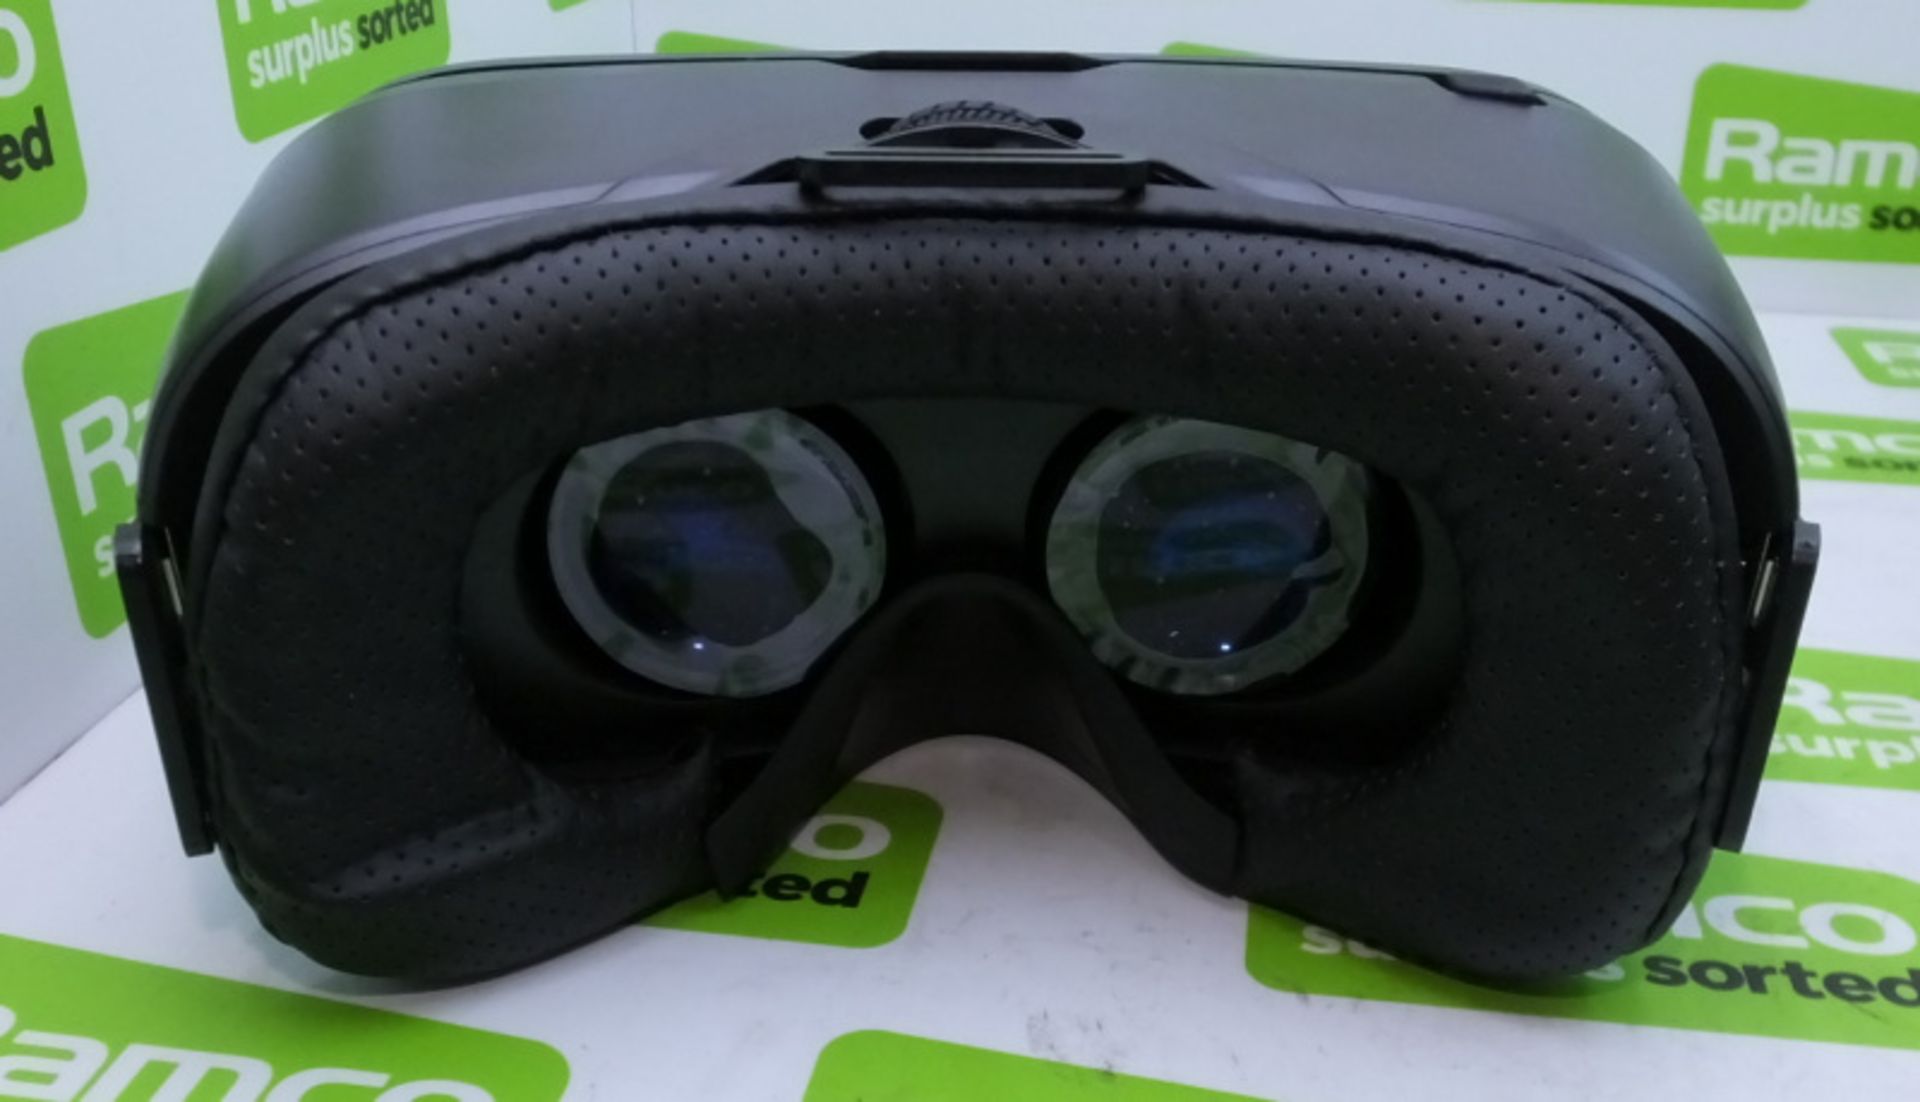 Destek V4 virtual reality headset - Image 4 of 4